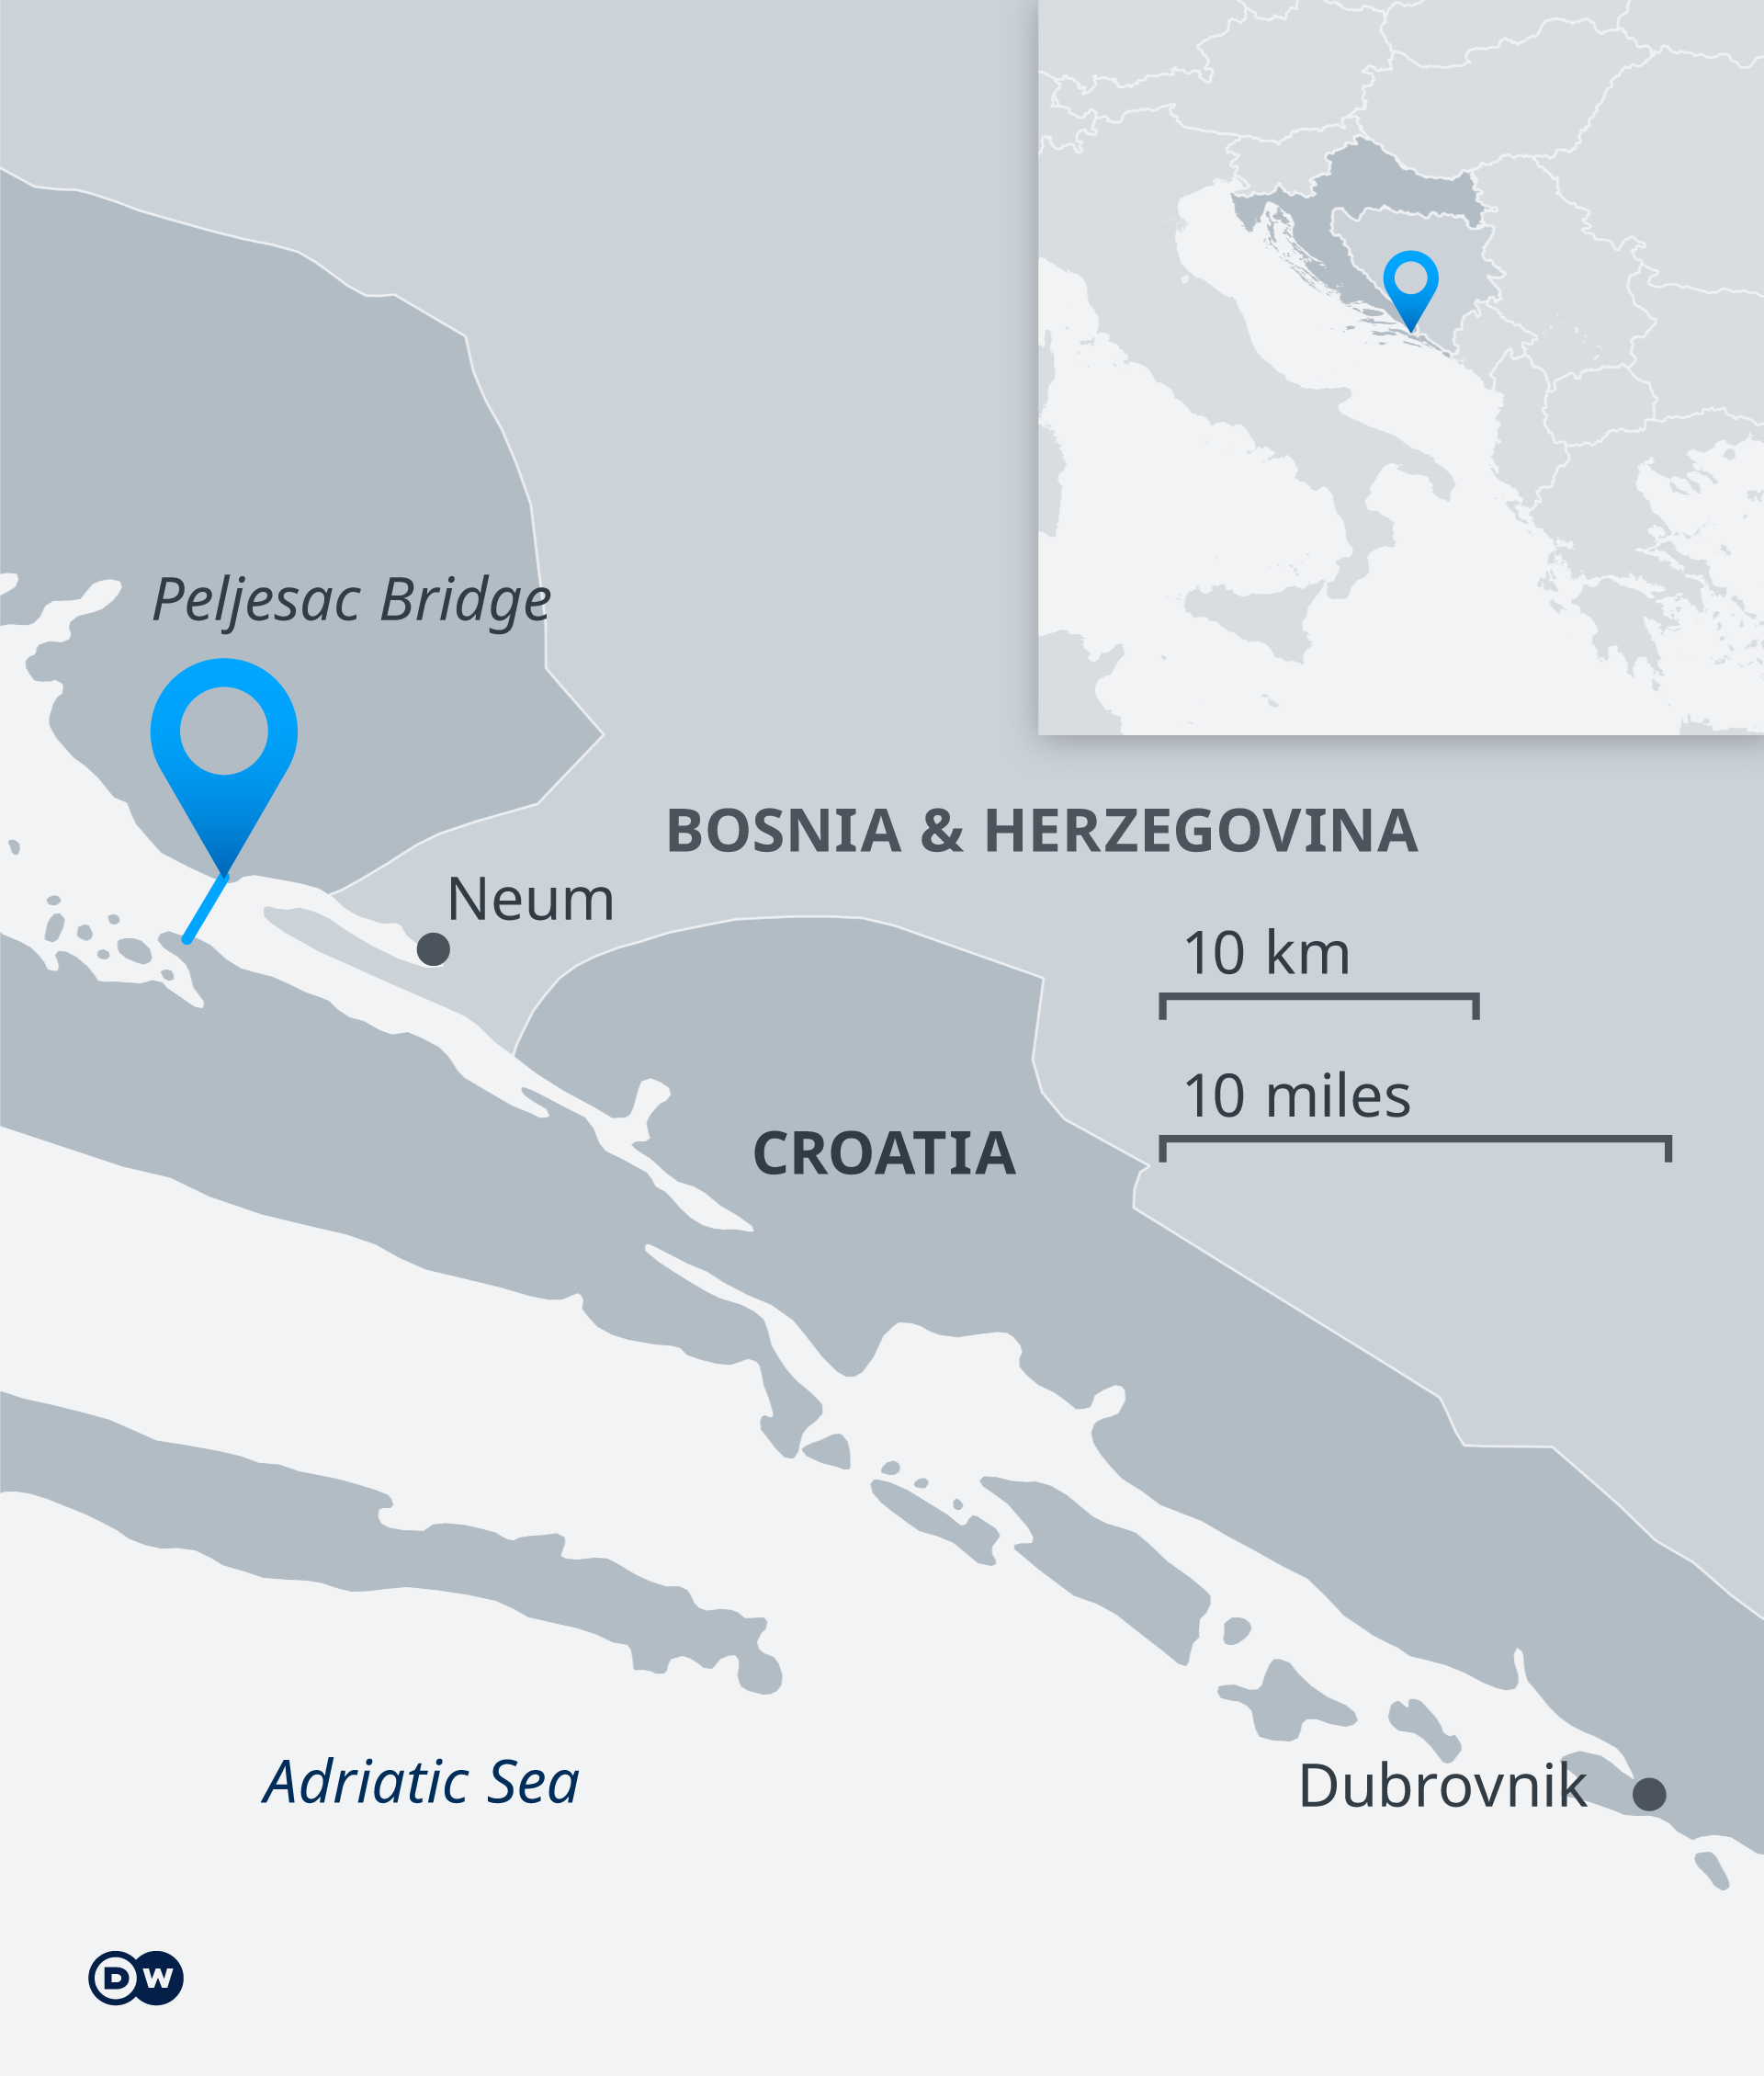  Location of Pelejsac Bridge within Croatia